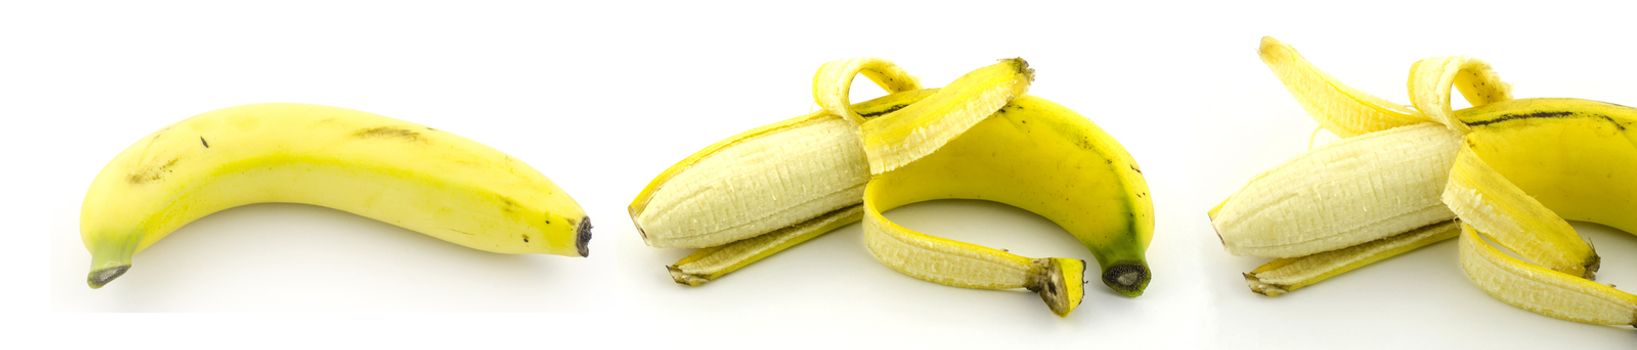 three banana isolate with white background